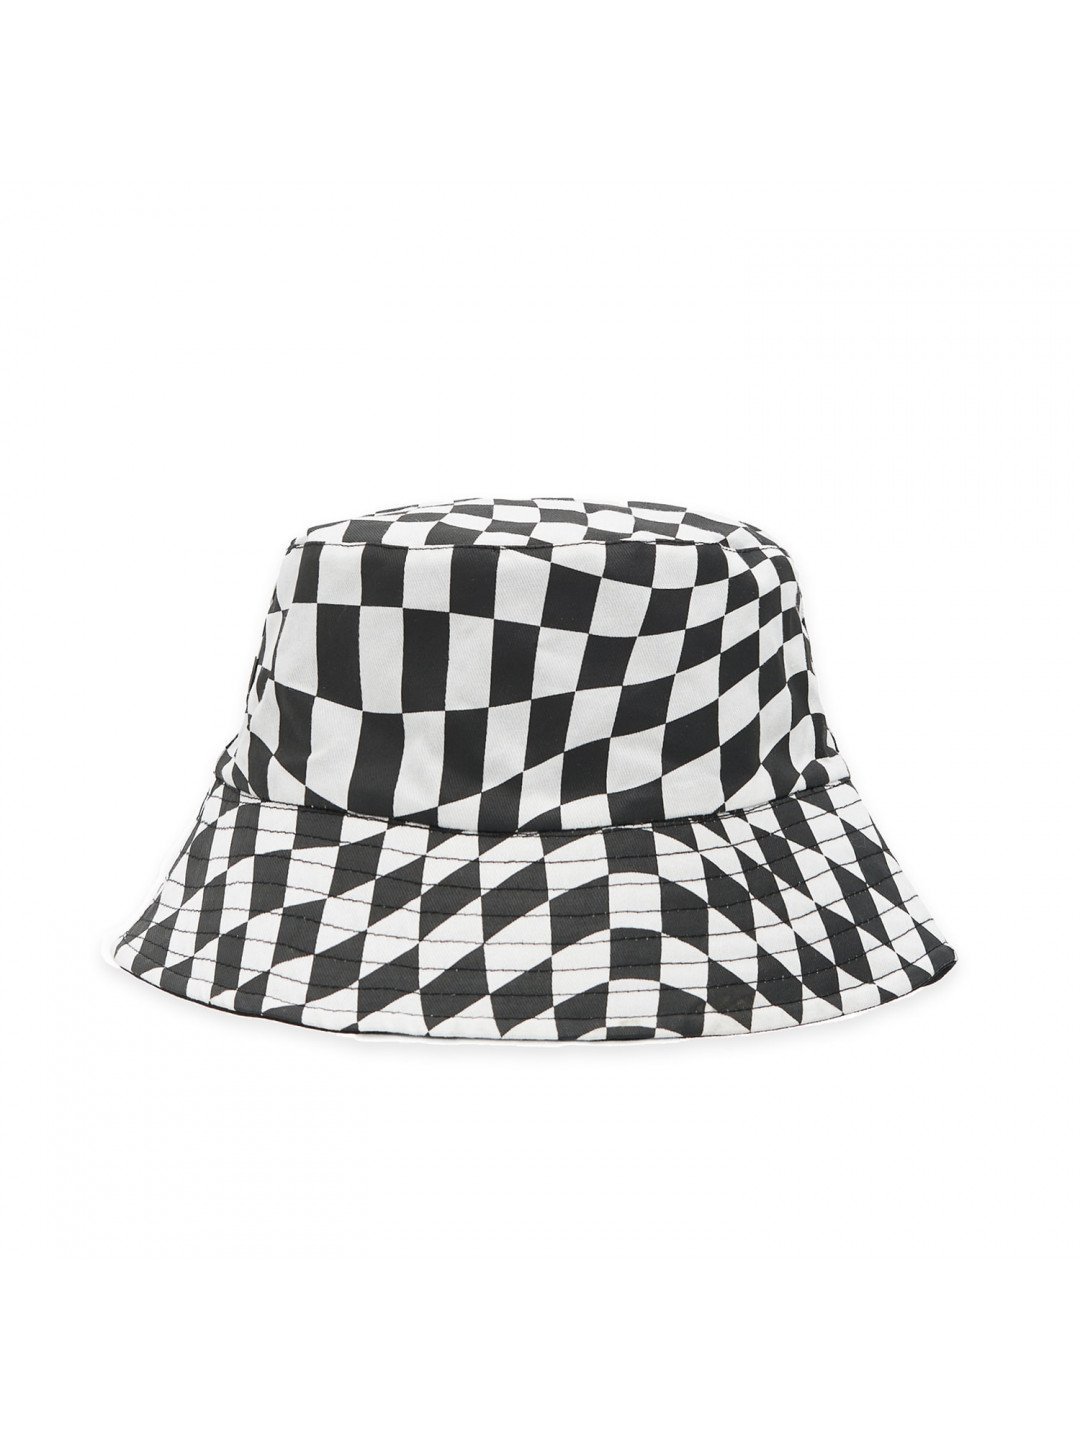 Cropp – Klobouk typu bucket hat – Černý